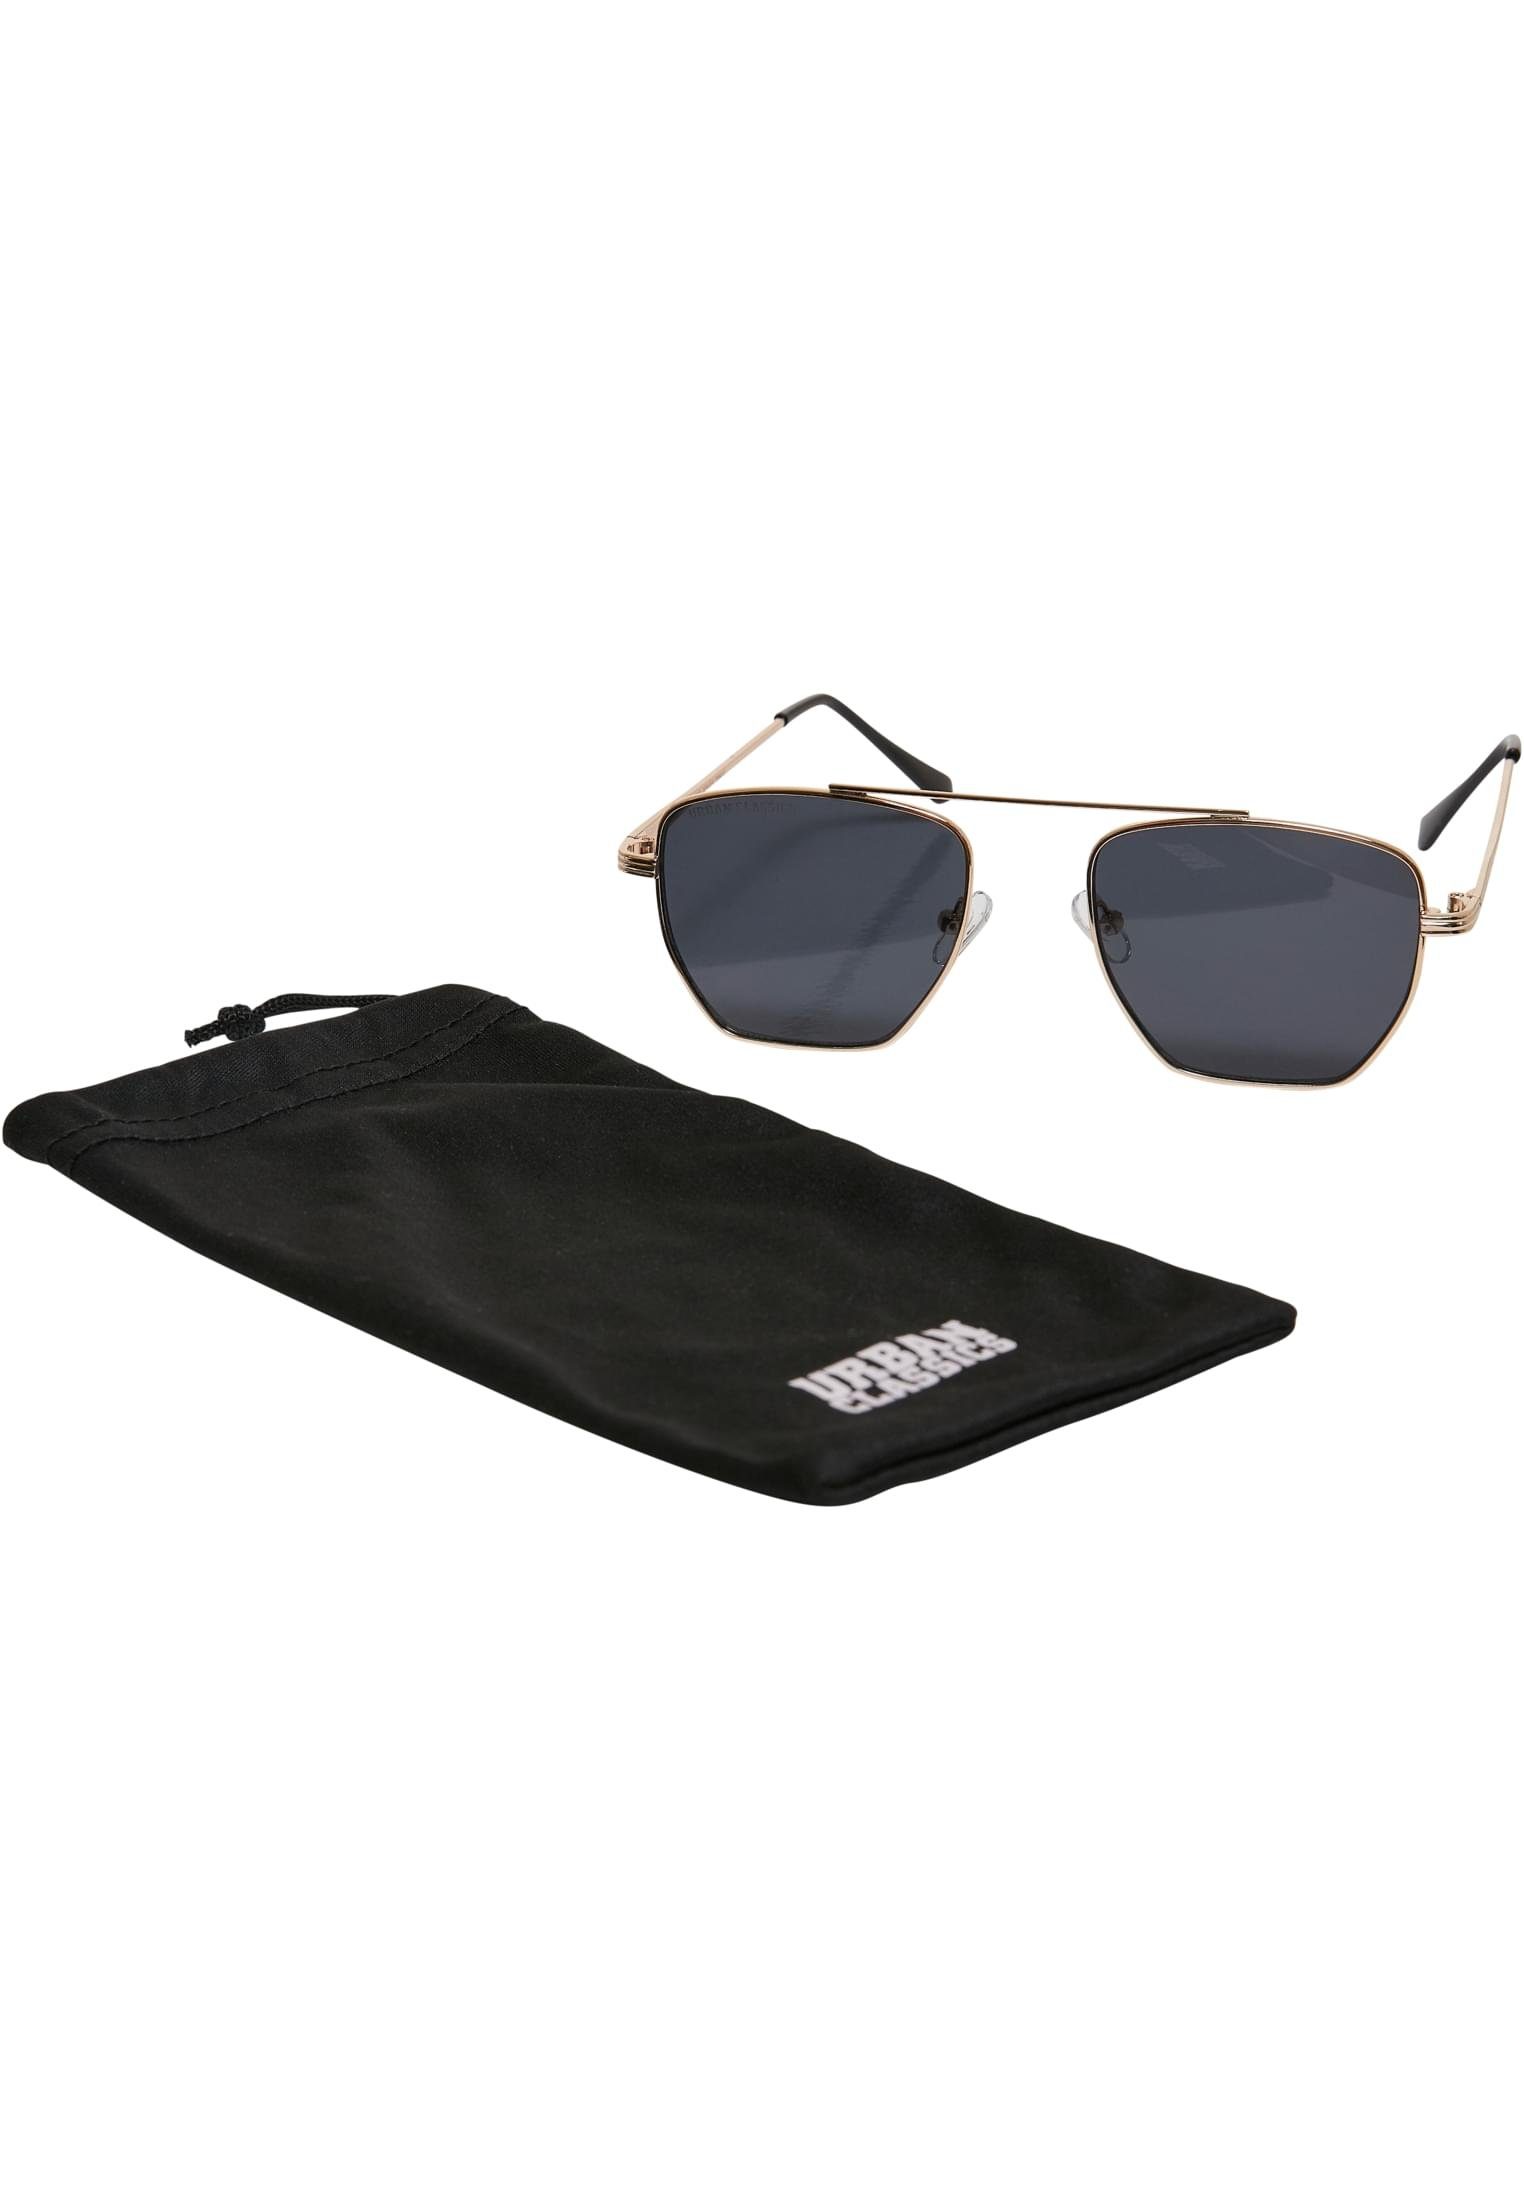 URBAN CLASSICS Sonnenbrille Unisex Sunglasses Denver black/gold